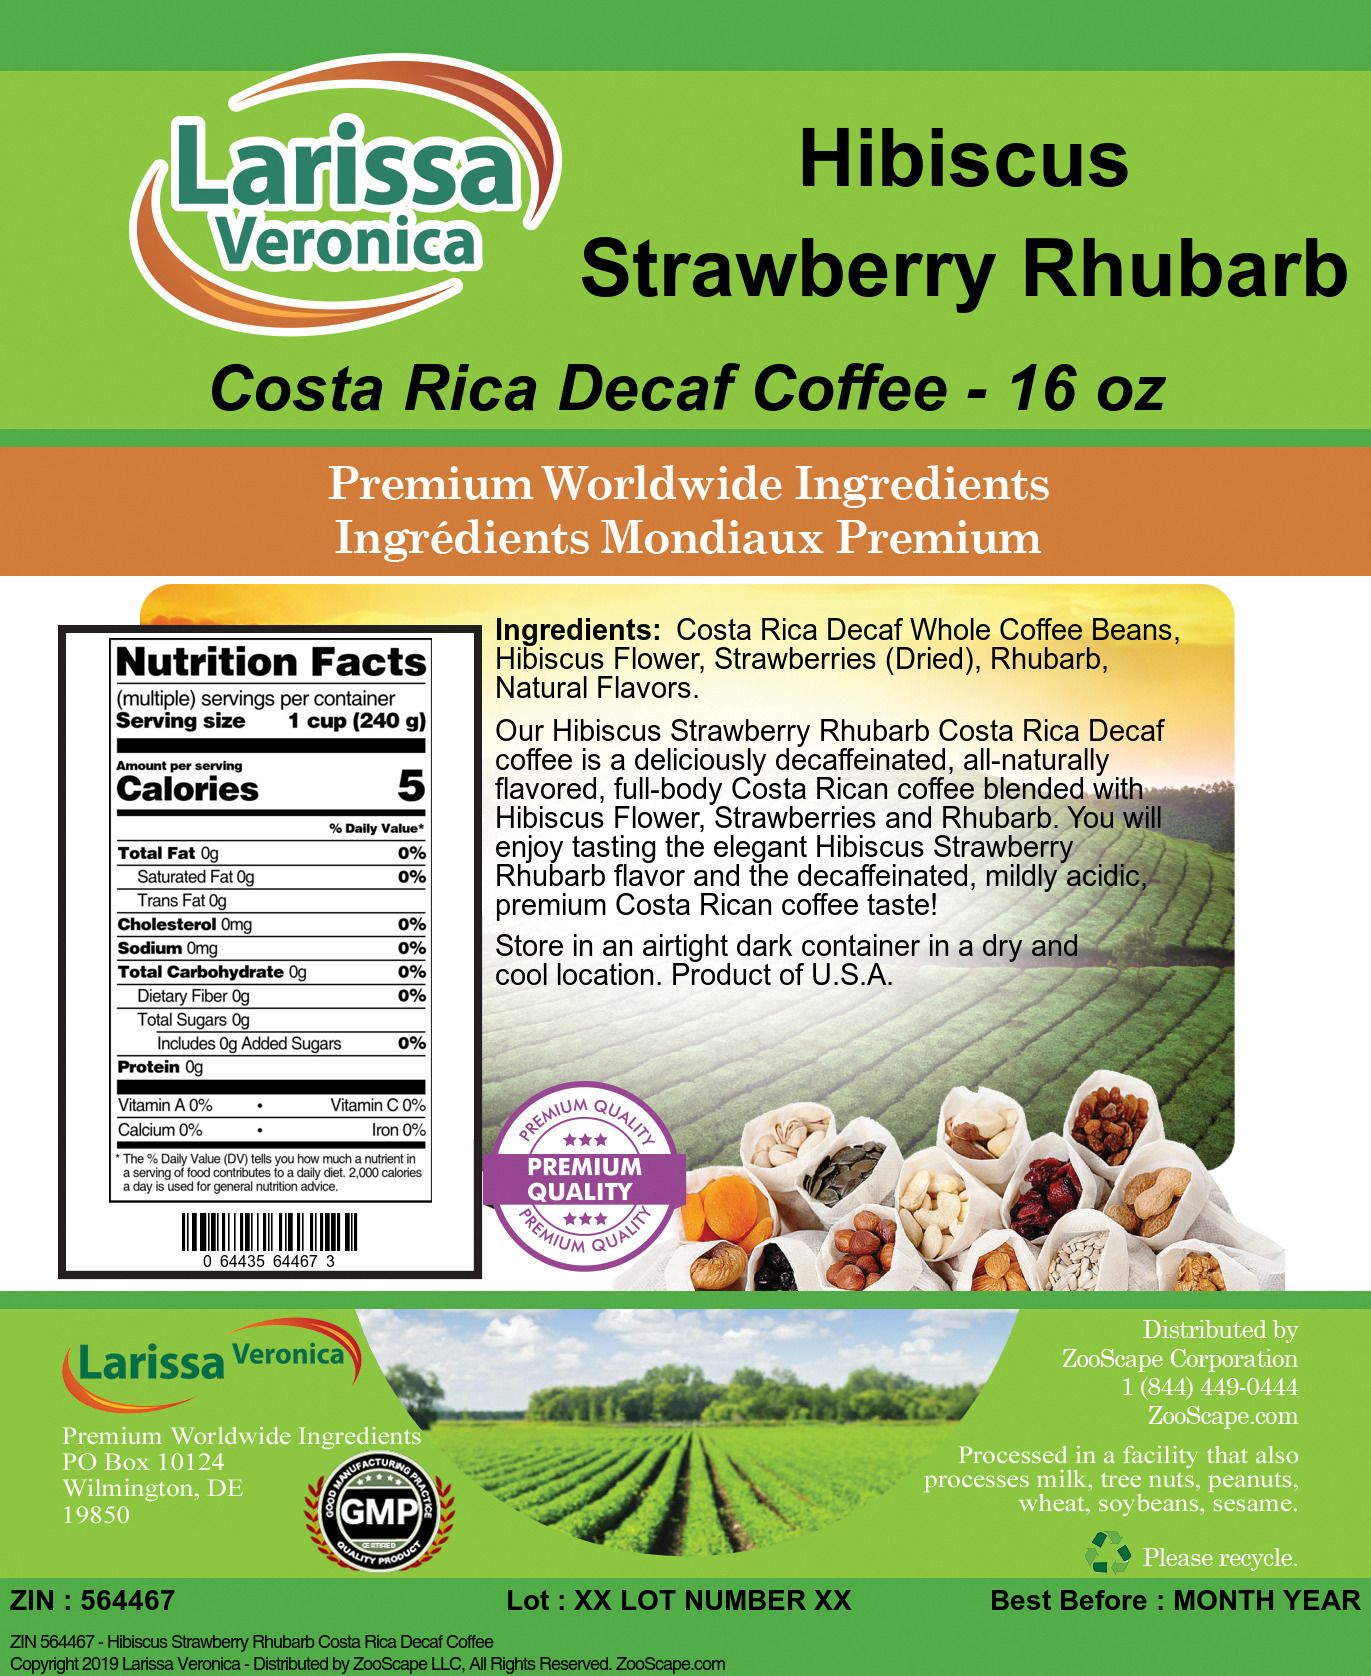 Hibiscus Strawberry Rhubarb Costa Rica Decaf Coffee - Label